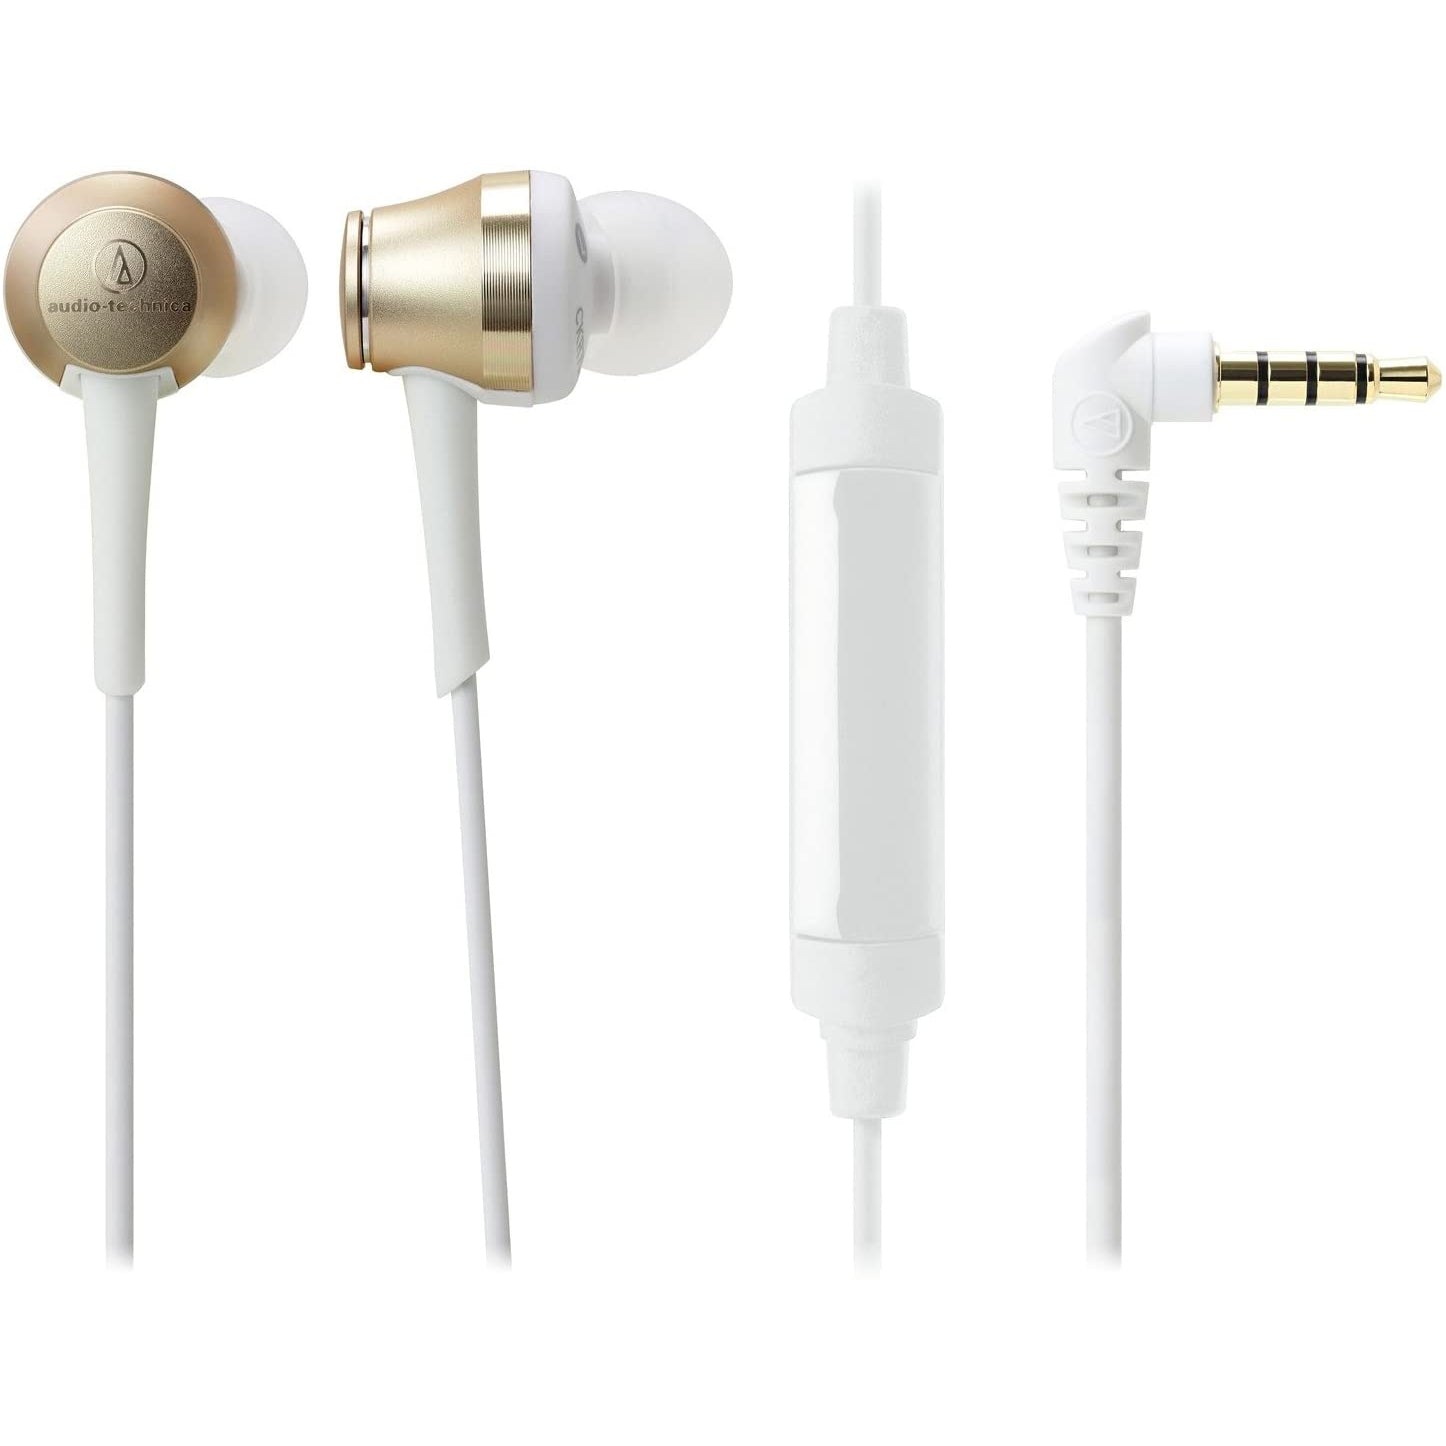 Audio Technica CKR70 Earphones - Gold and White